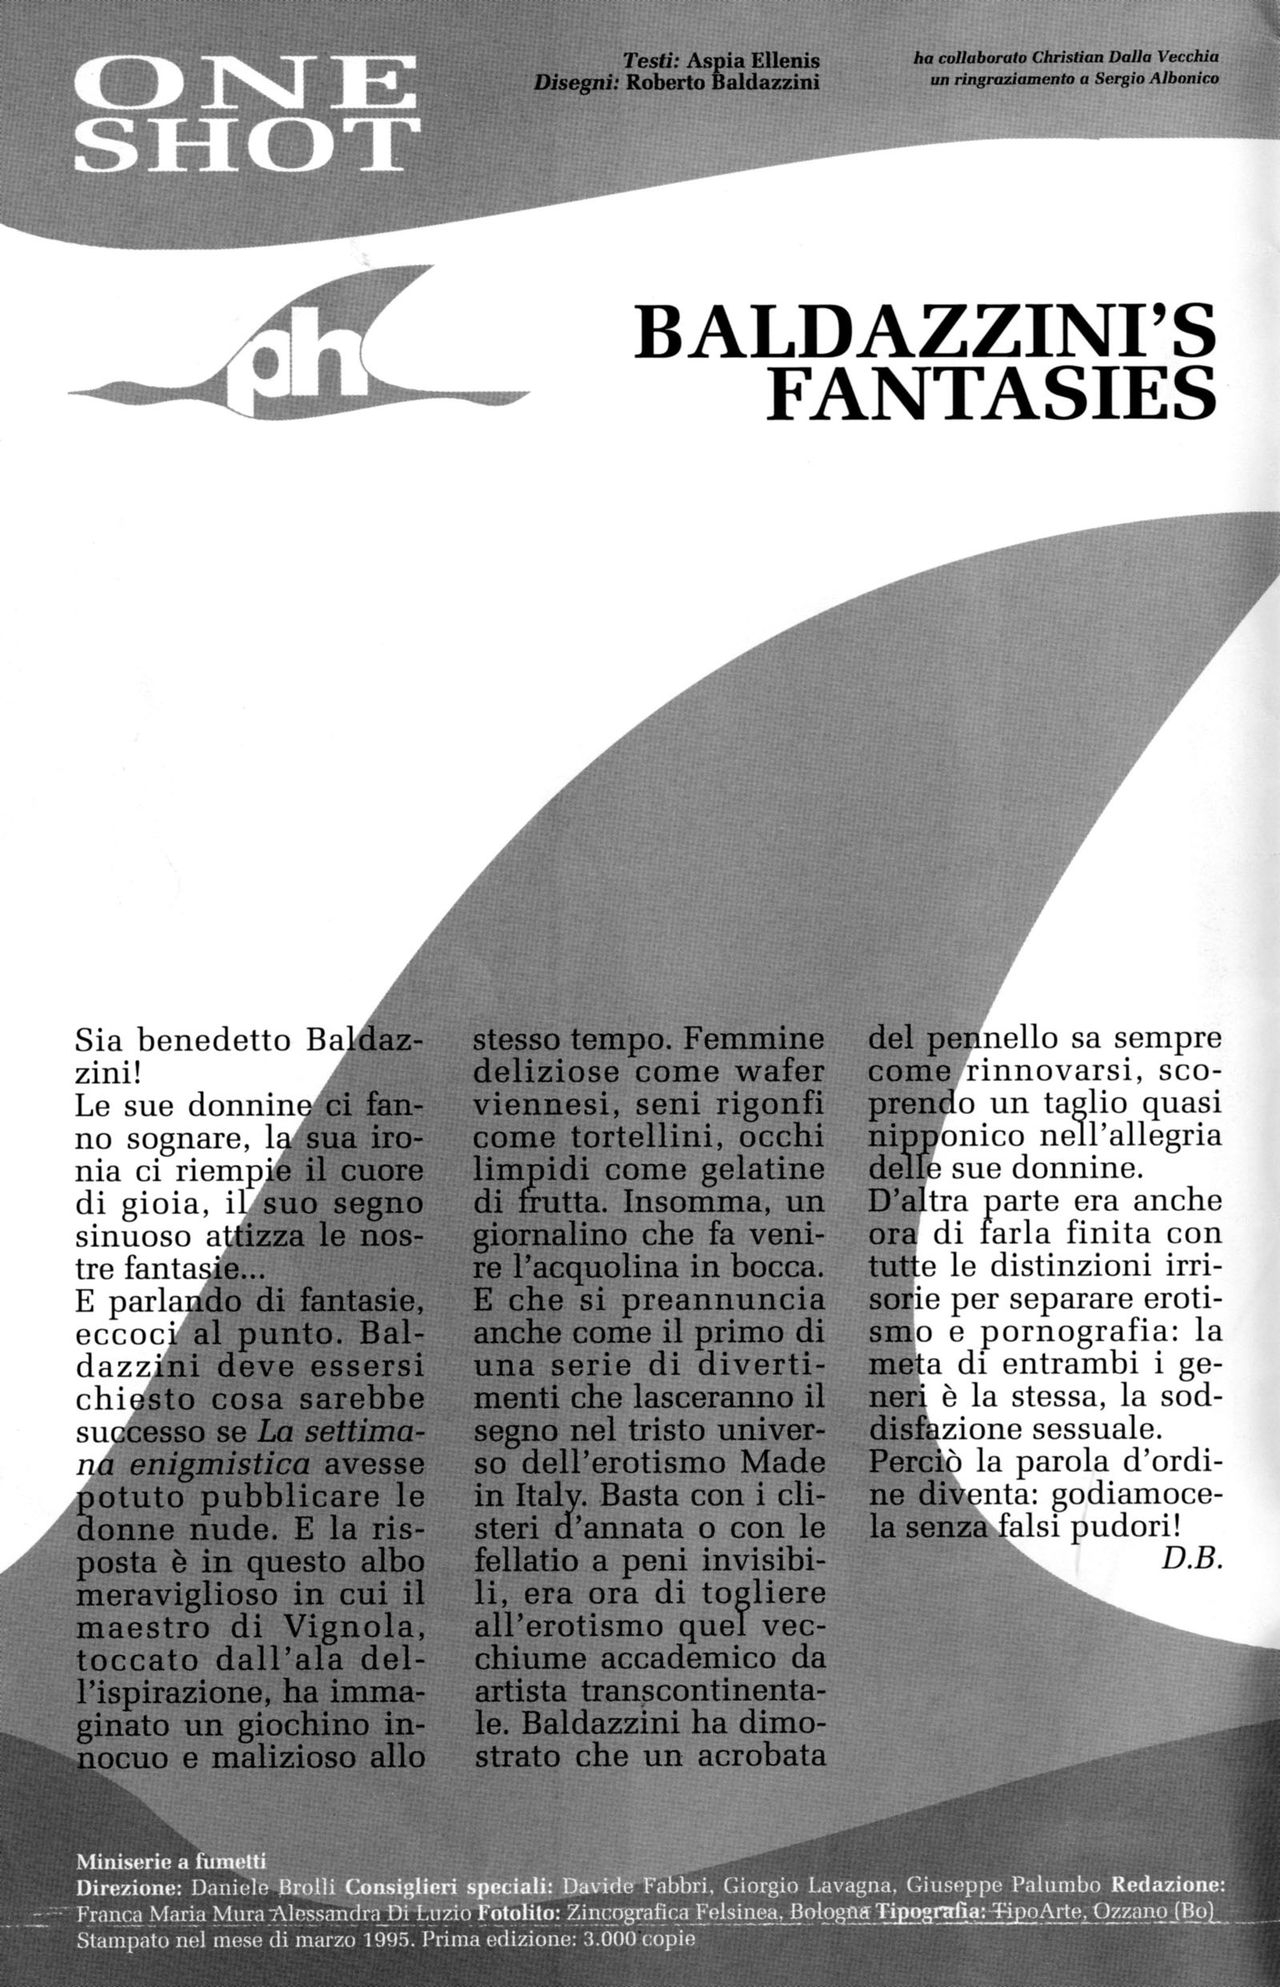 Baldazzini's fantasies (IT) 2